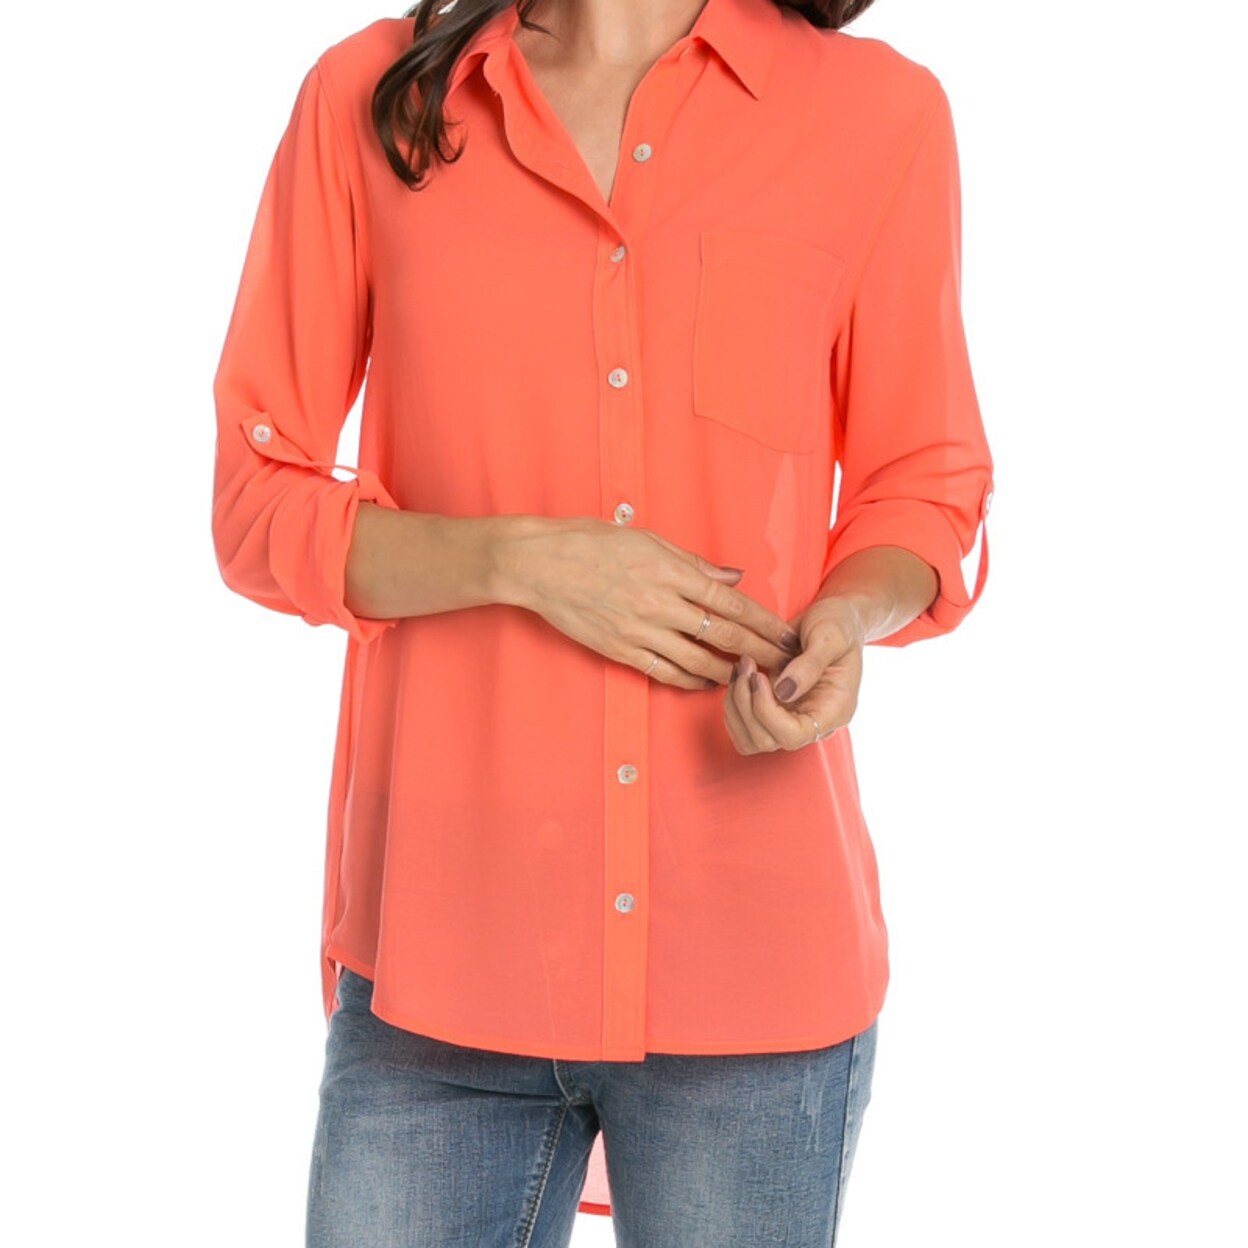 coral chiffon blouse